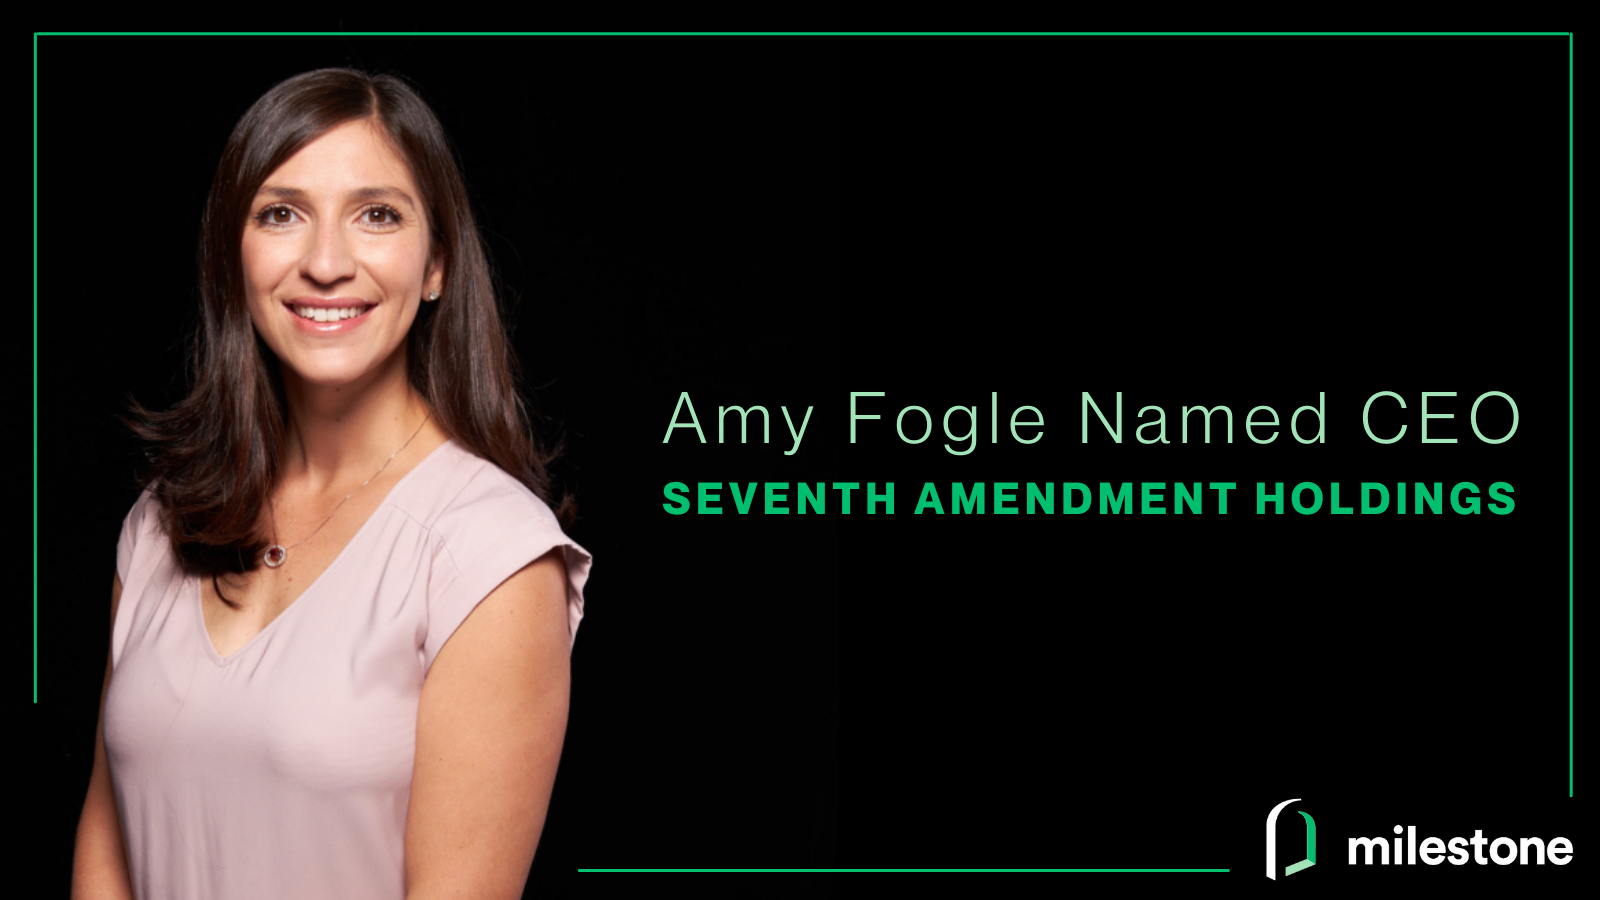 Milestone Announces Amy Fogle as CEO